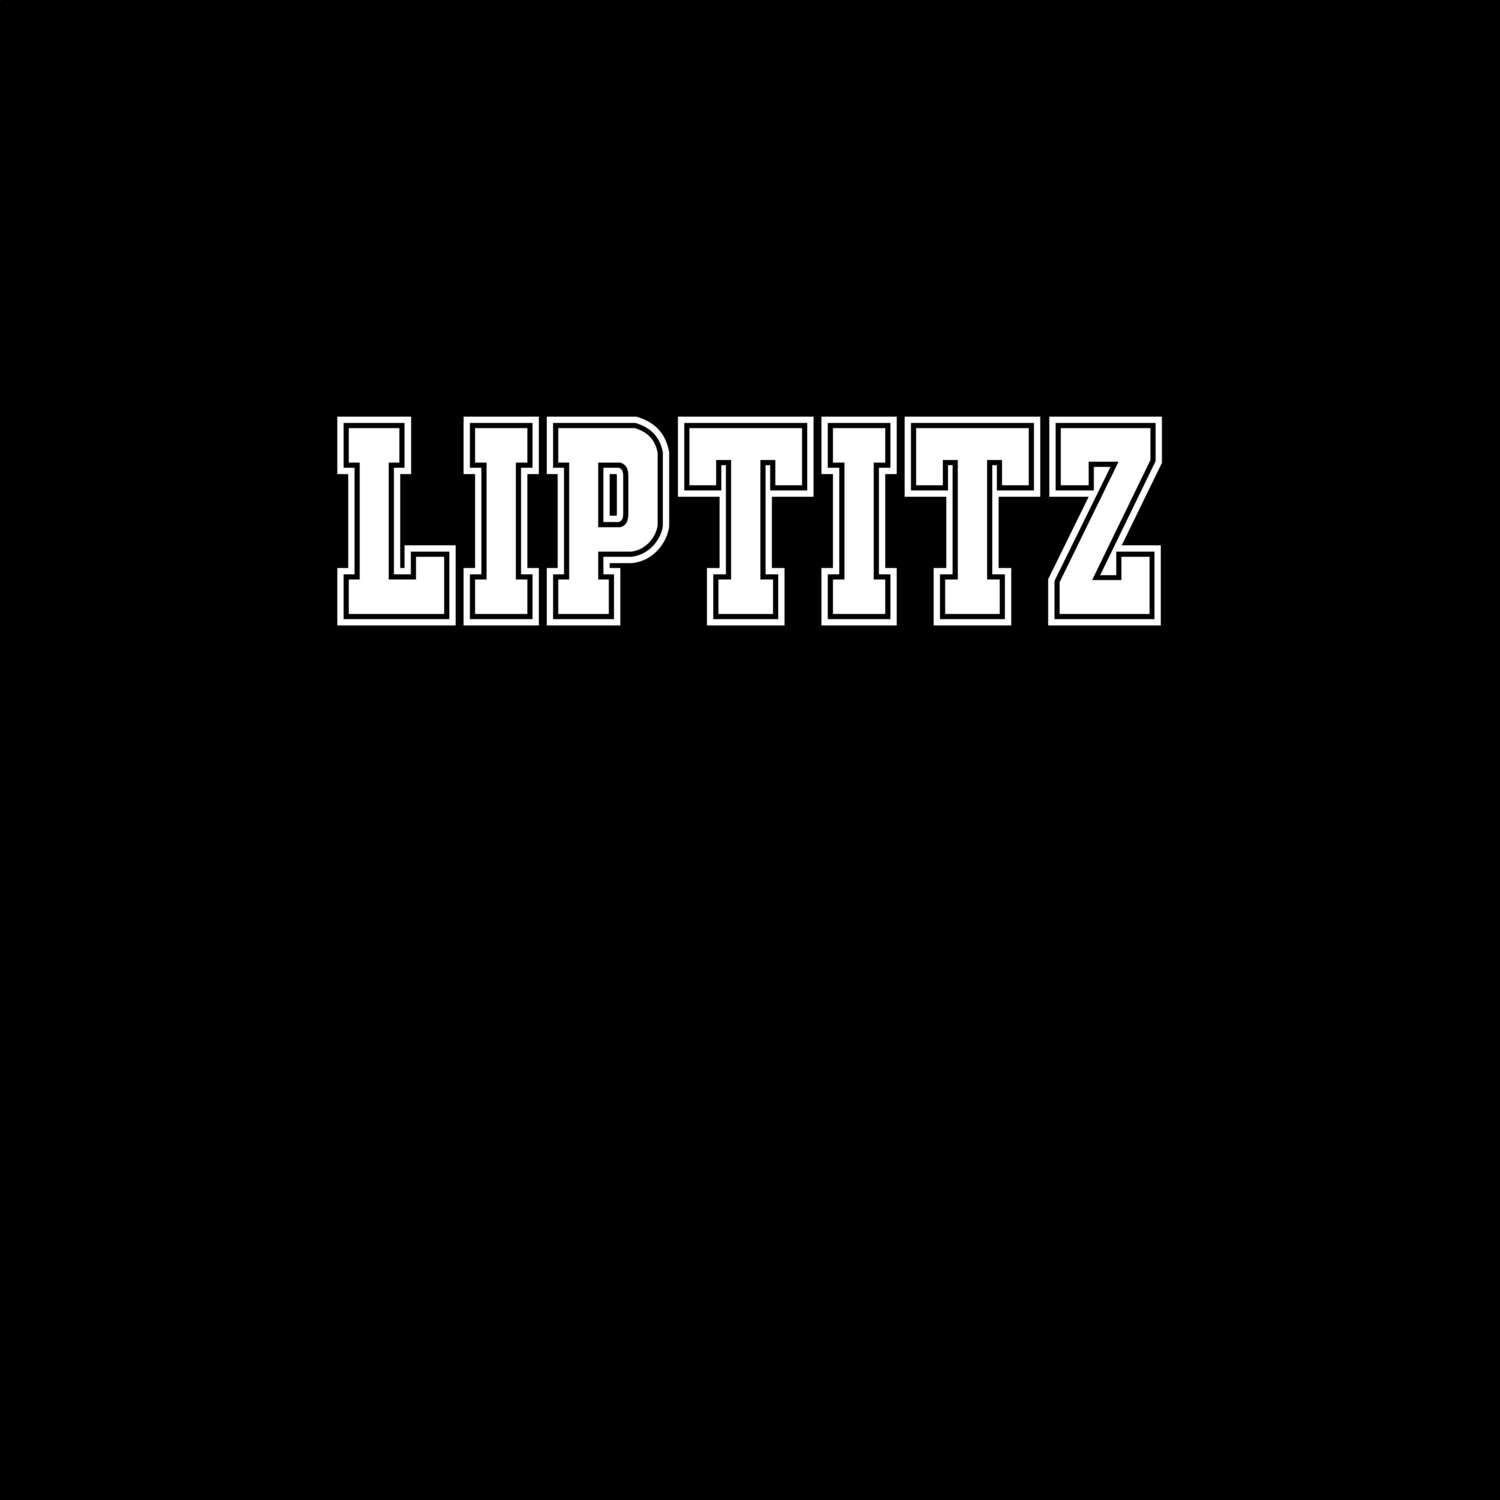 Liptitz T-Shirt »Classic«